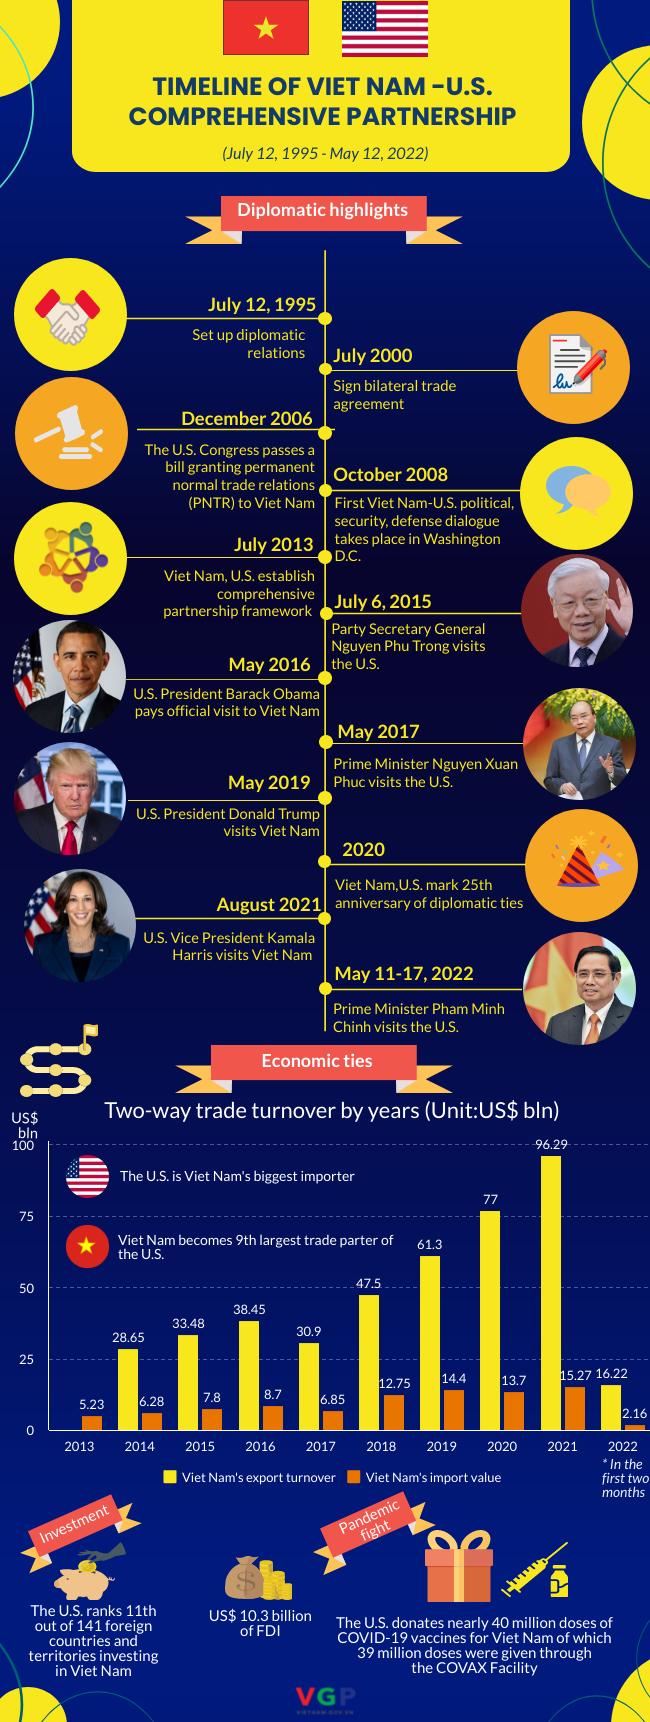 Timeline of Viet Nam-U.S. comprehensive partnership